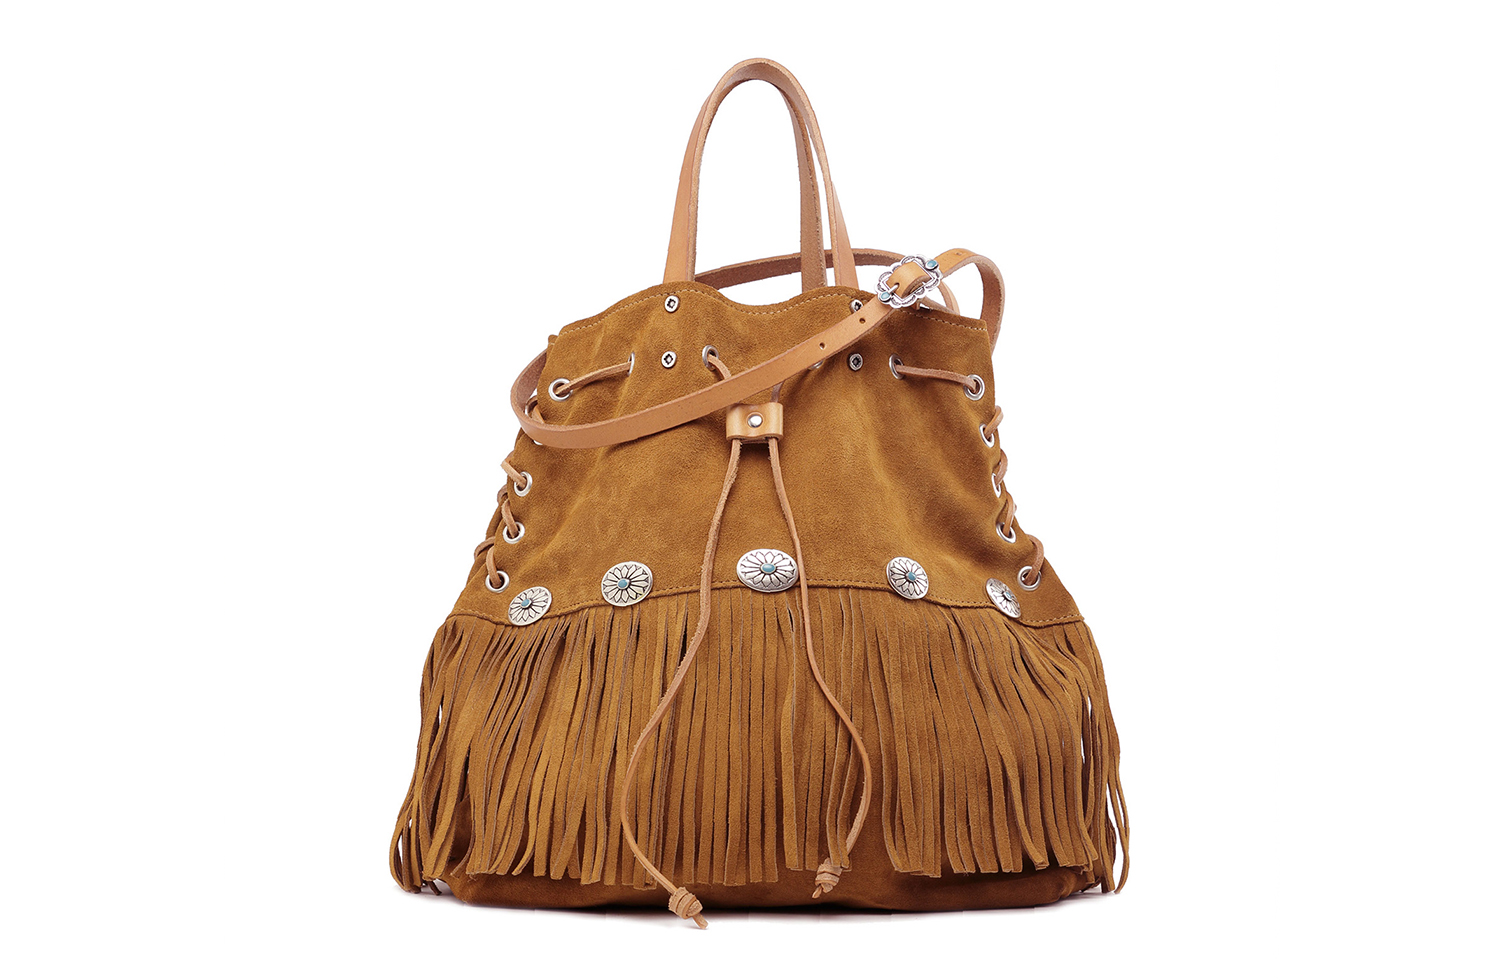 Woman Bags - Handbag - Coachella Fringed Suede - 100% Handmade in ...